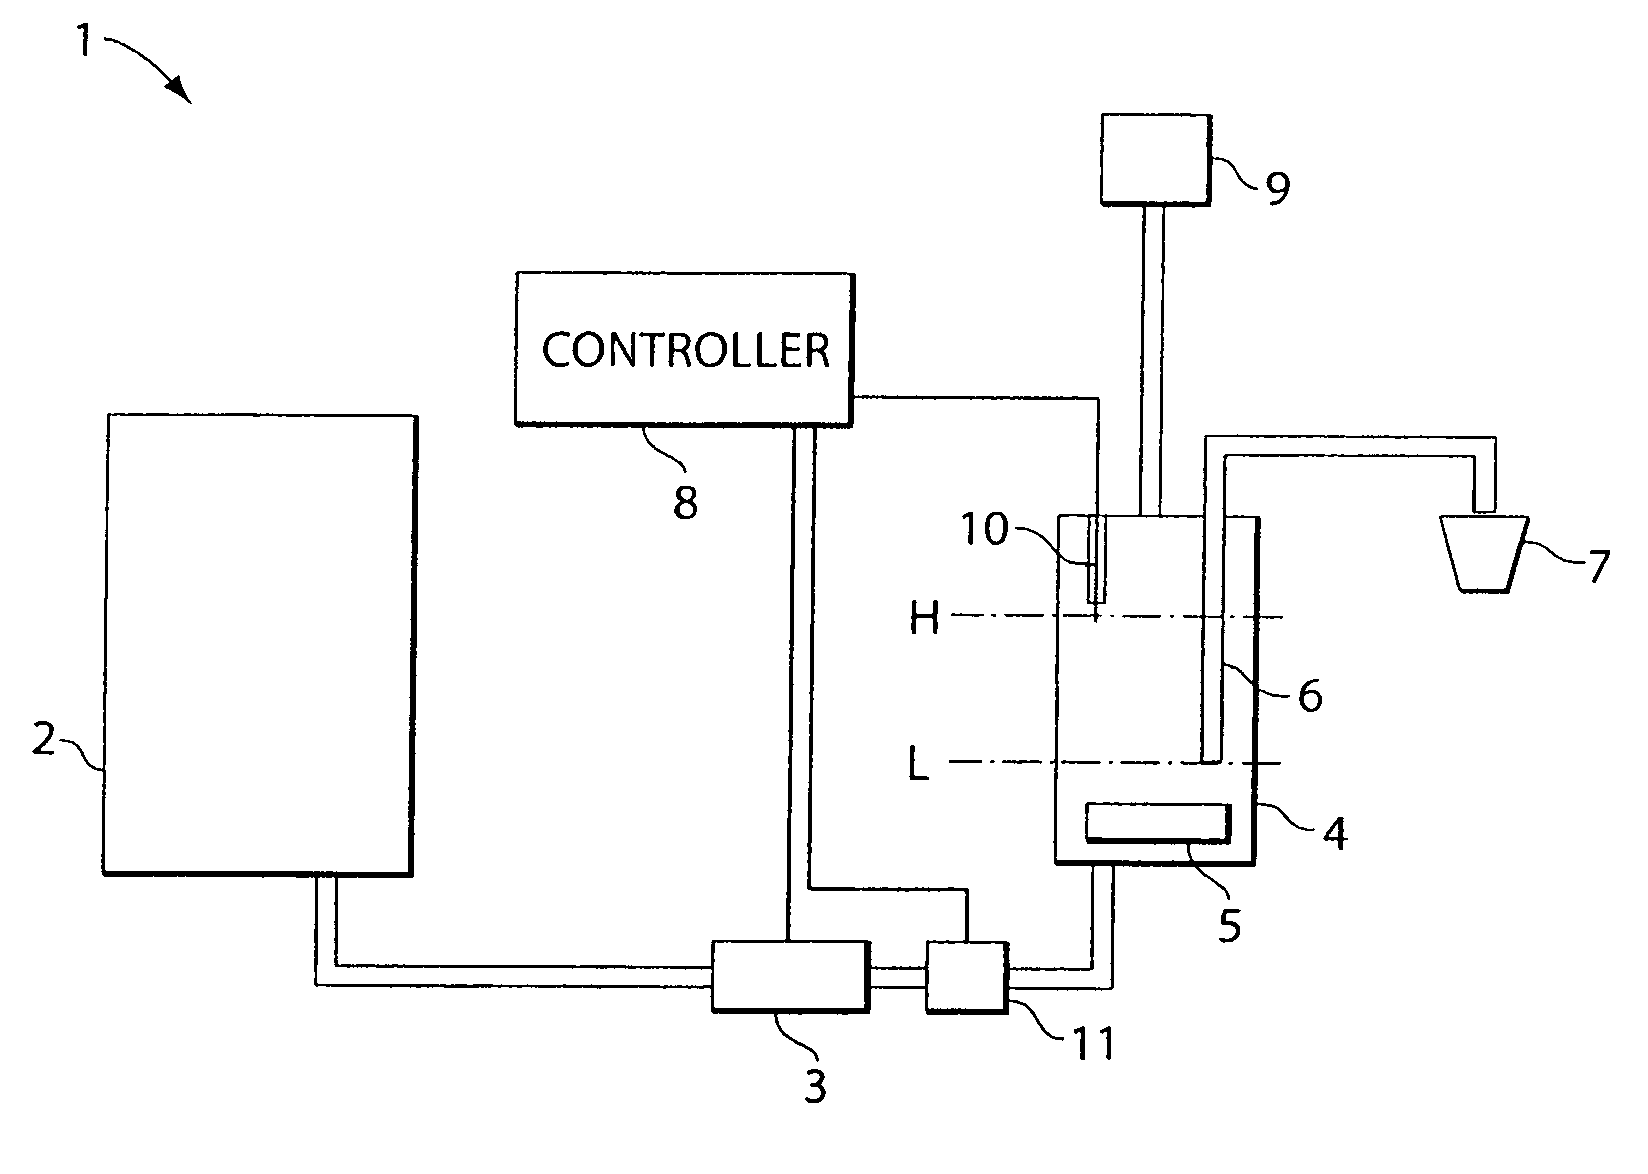 Method and apparatus for sensing liquid level using baseline characteristic